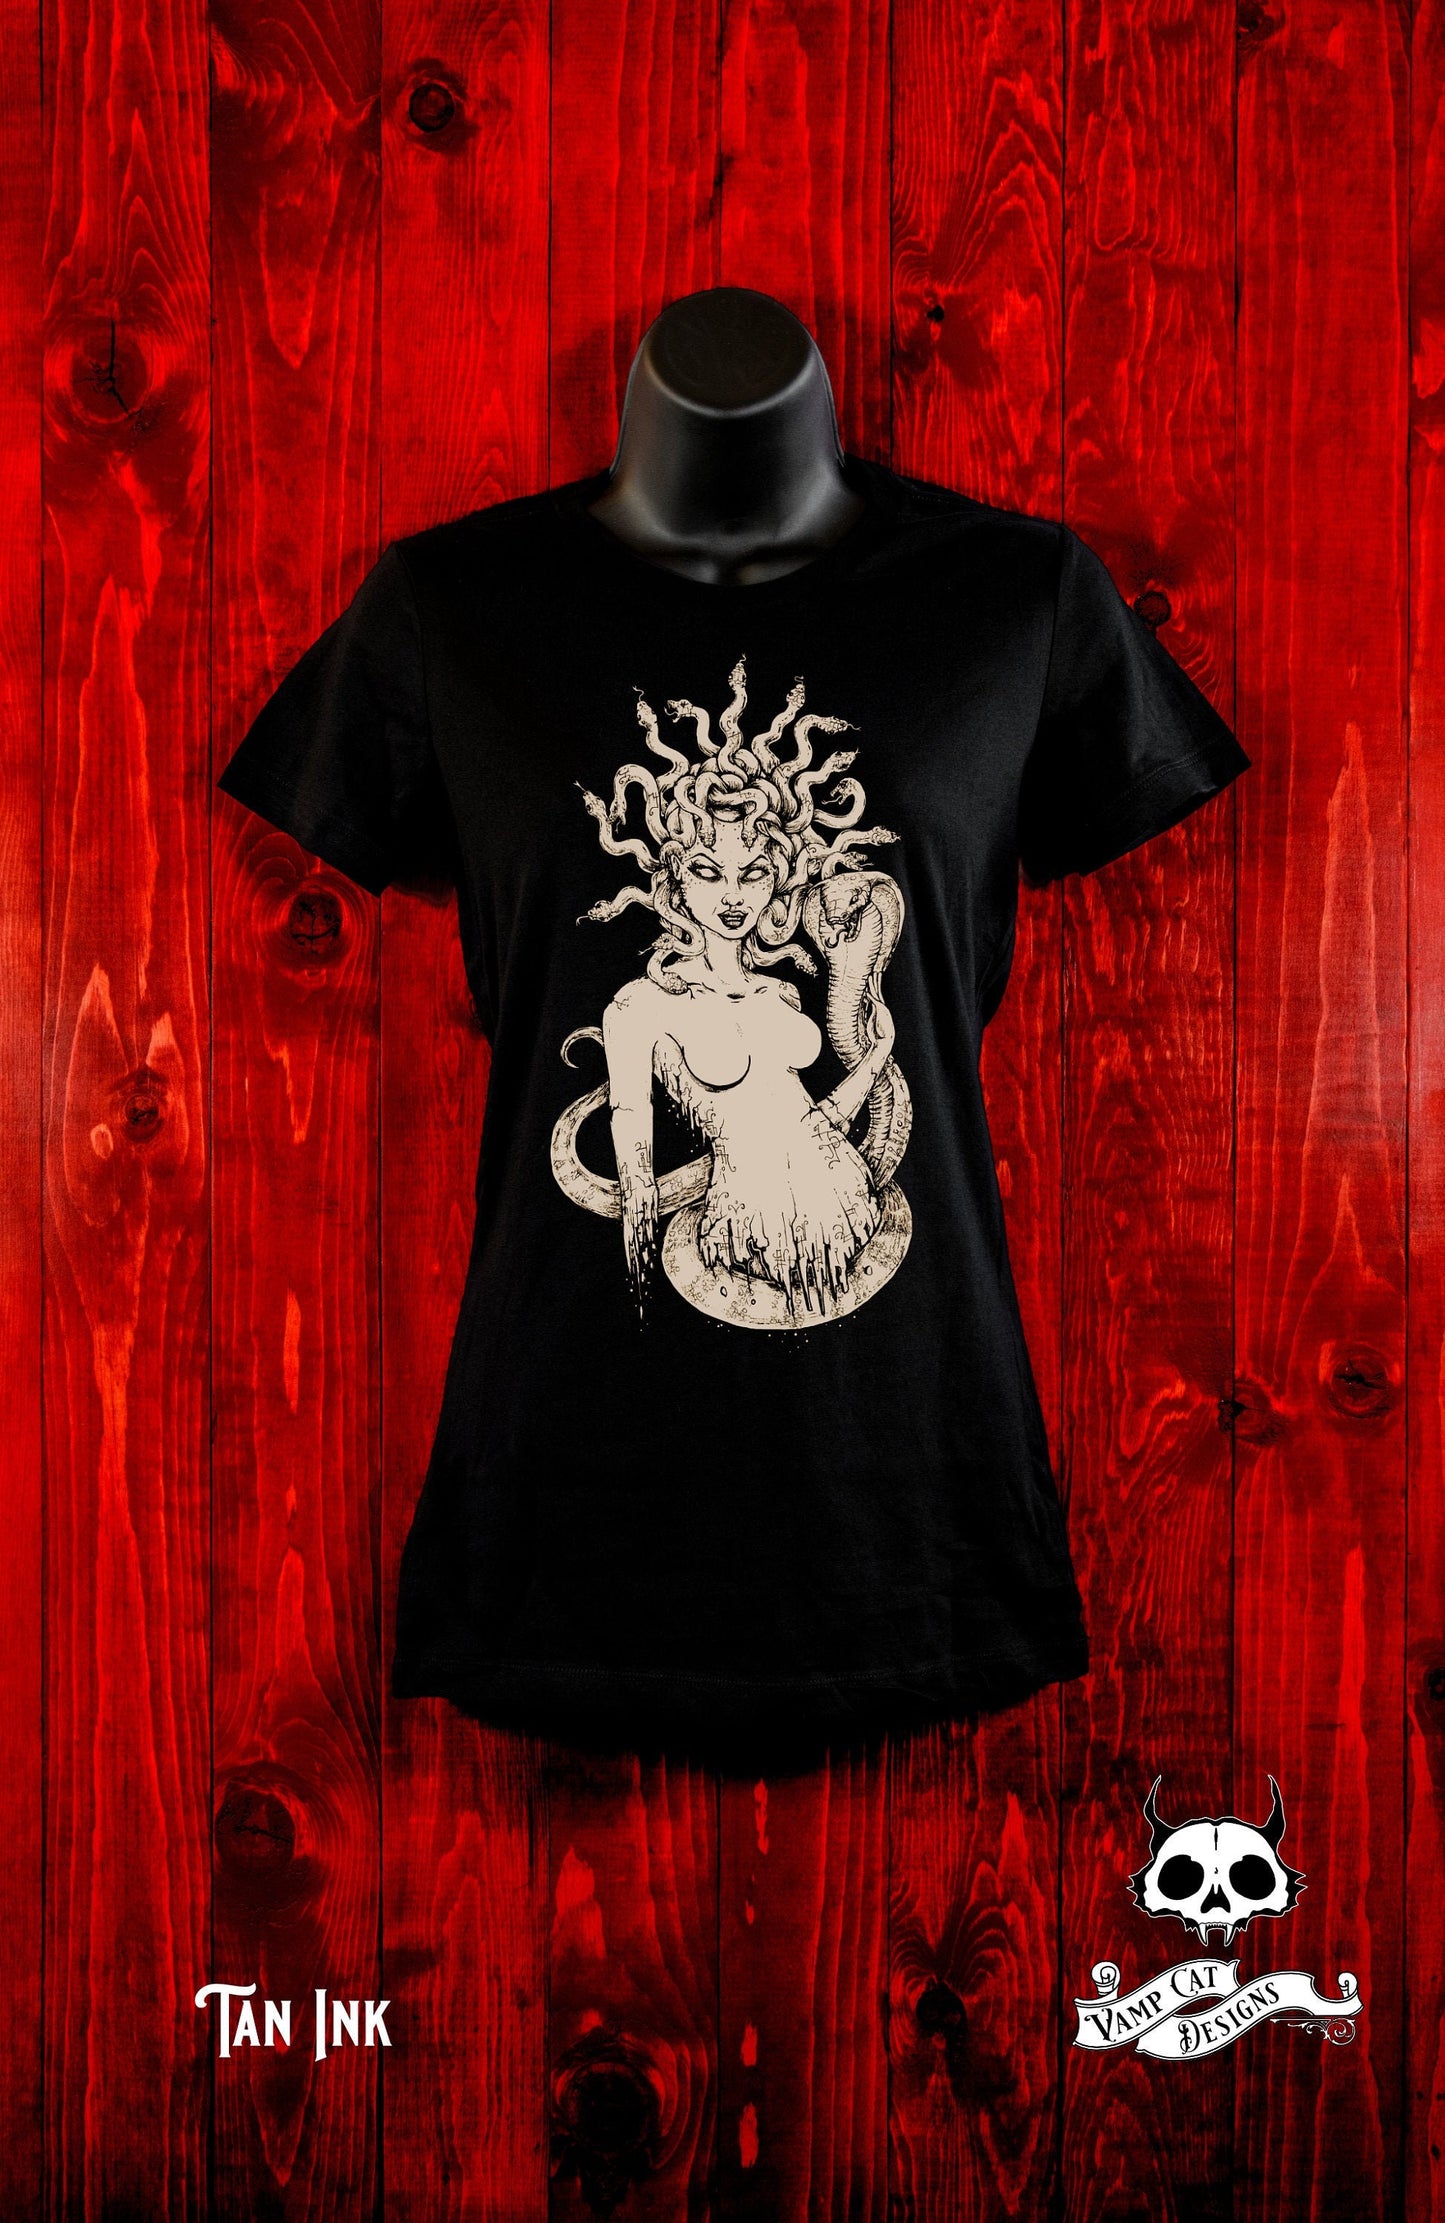 Medusa-Women's Tee-Illustration-Art T-shirt-Women's Clothing-Snake Woman-Gothic Apparel-Mythical Creature-Snakes-Monsters-Greek Art-Gifts